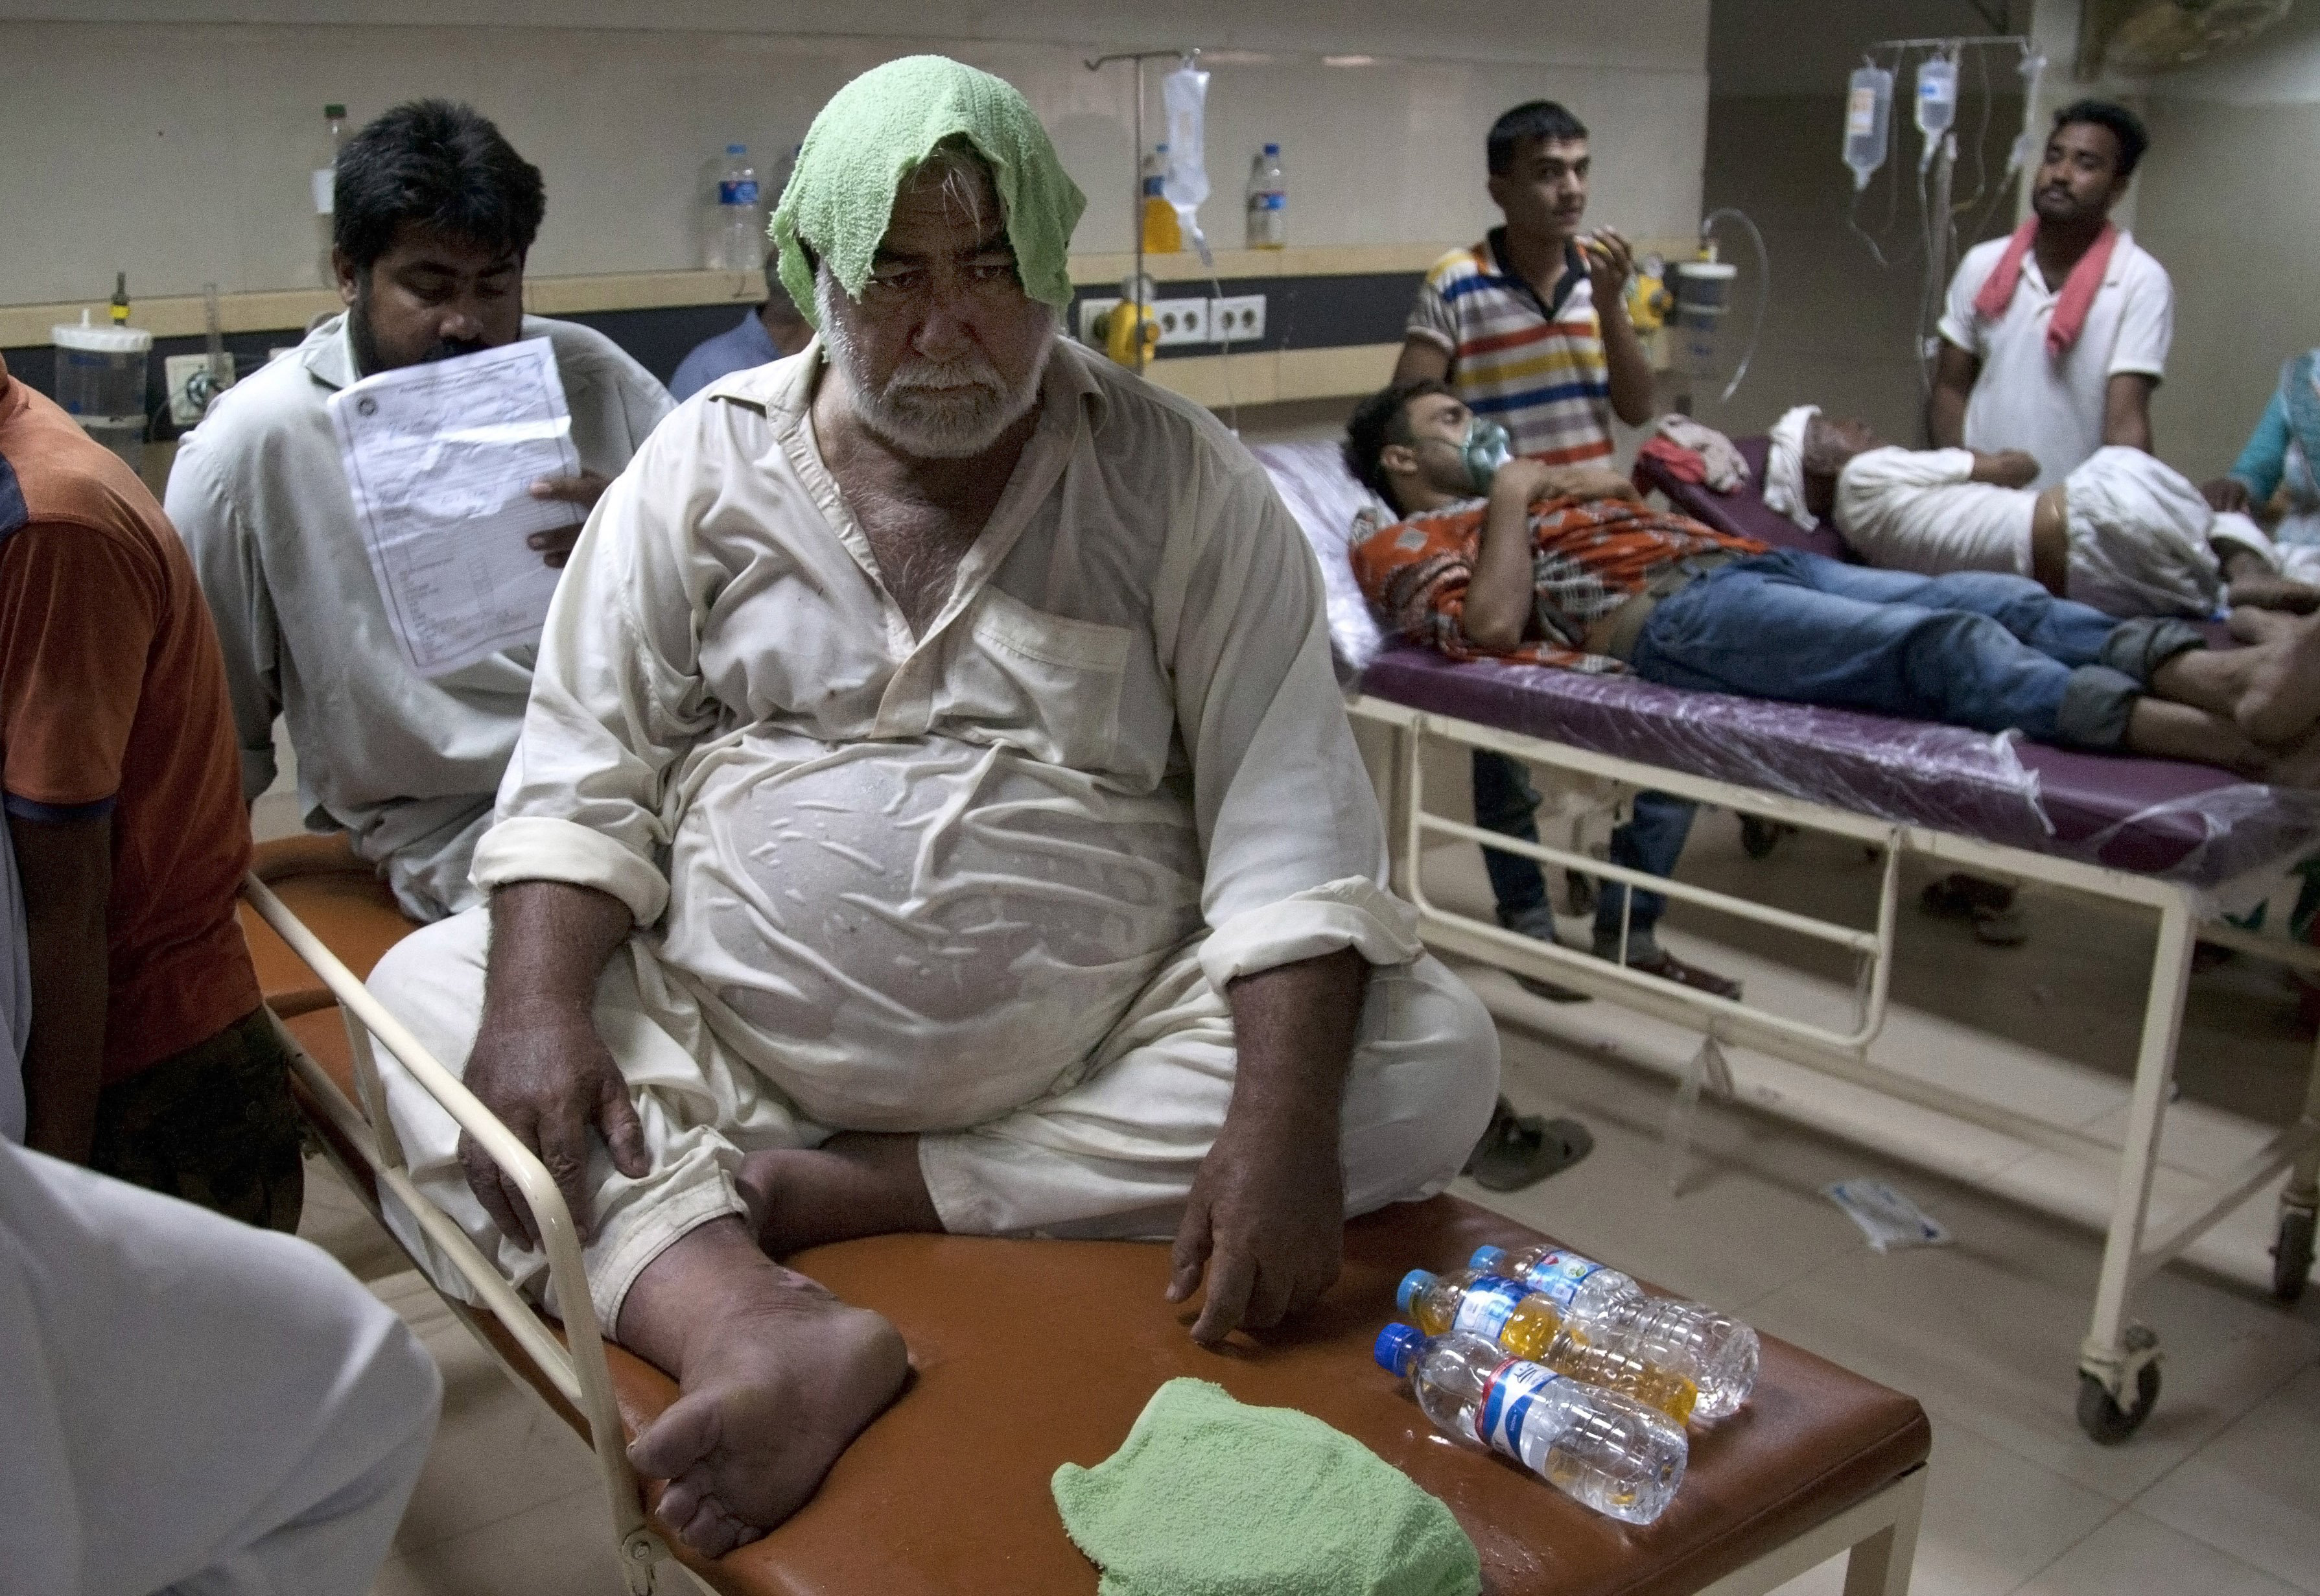 Pakistani patients suffering from heatstroke receive treatment at a local hospital in Karachi, Pakistan, on June 24, 2015.